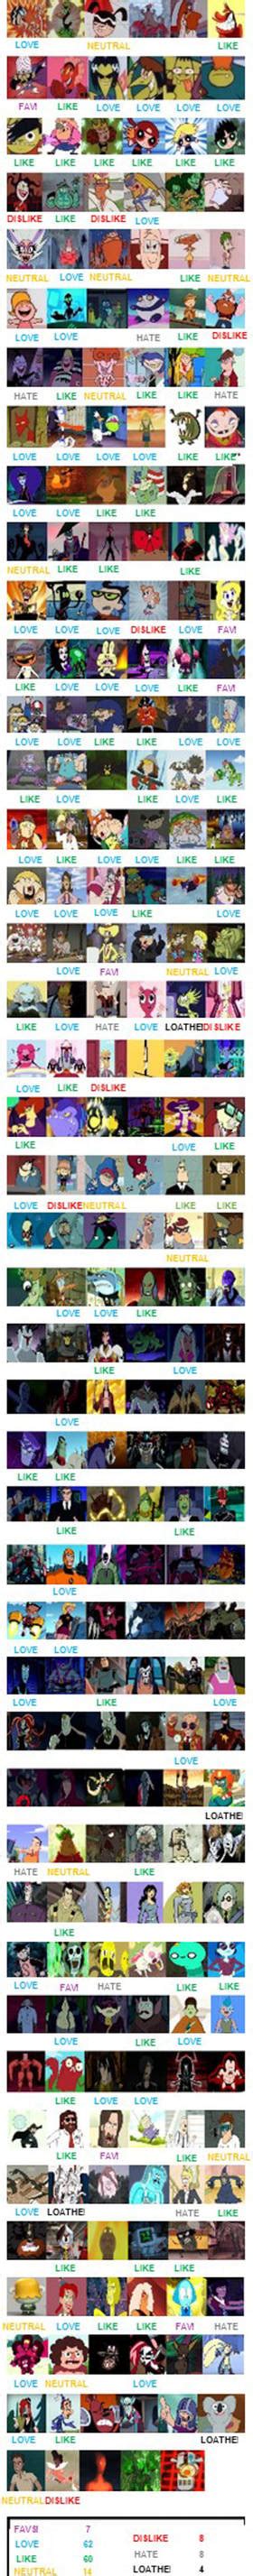 Cartoon Network Antagonist Character Scorecard By Aviytph